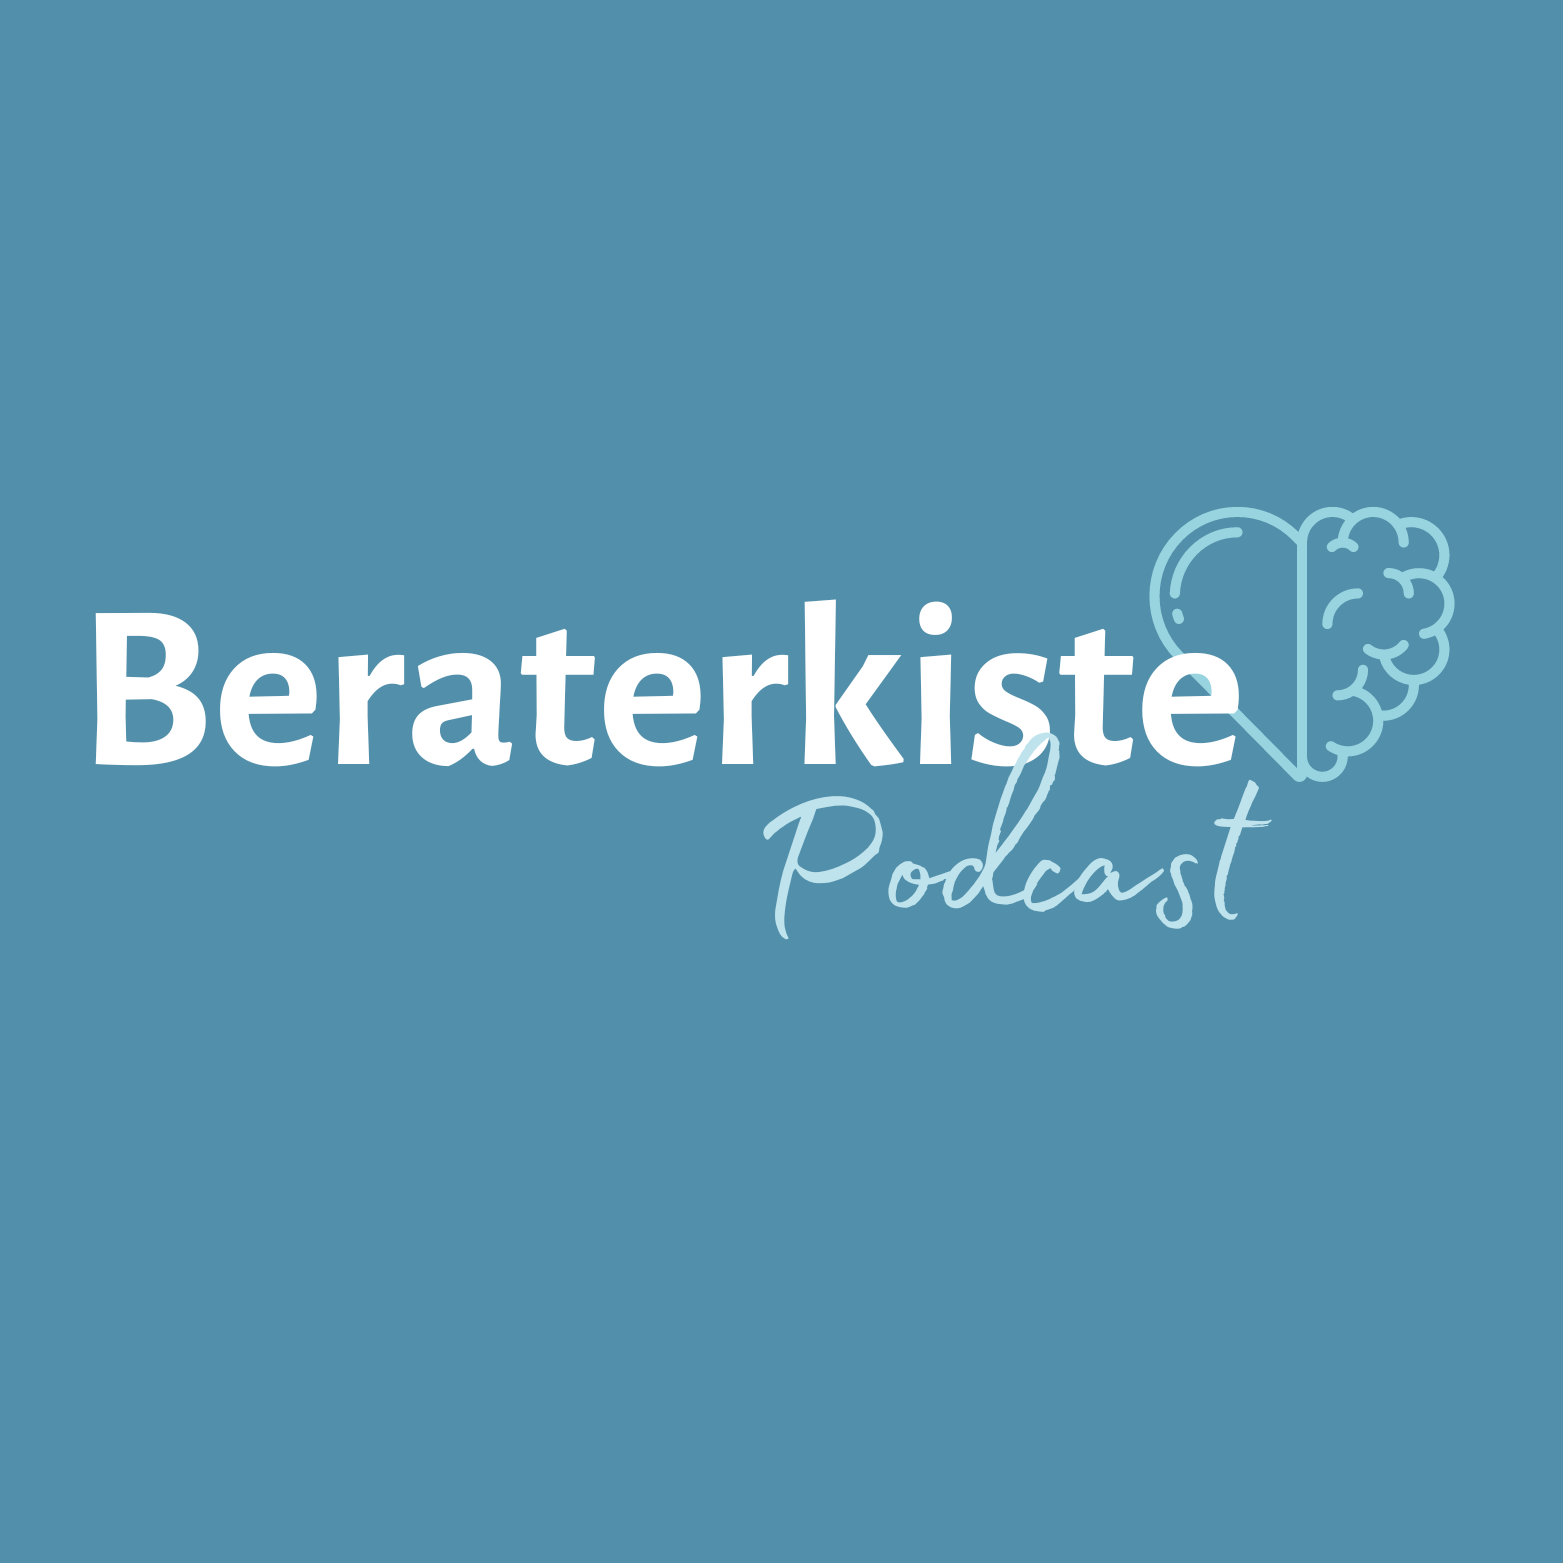 Beraterkiste Podcast